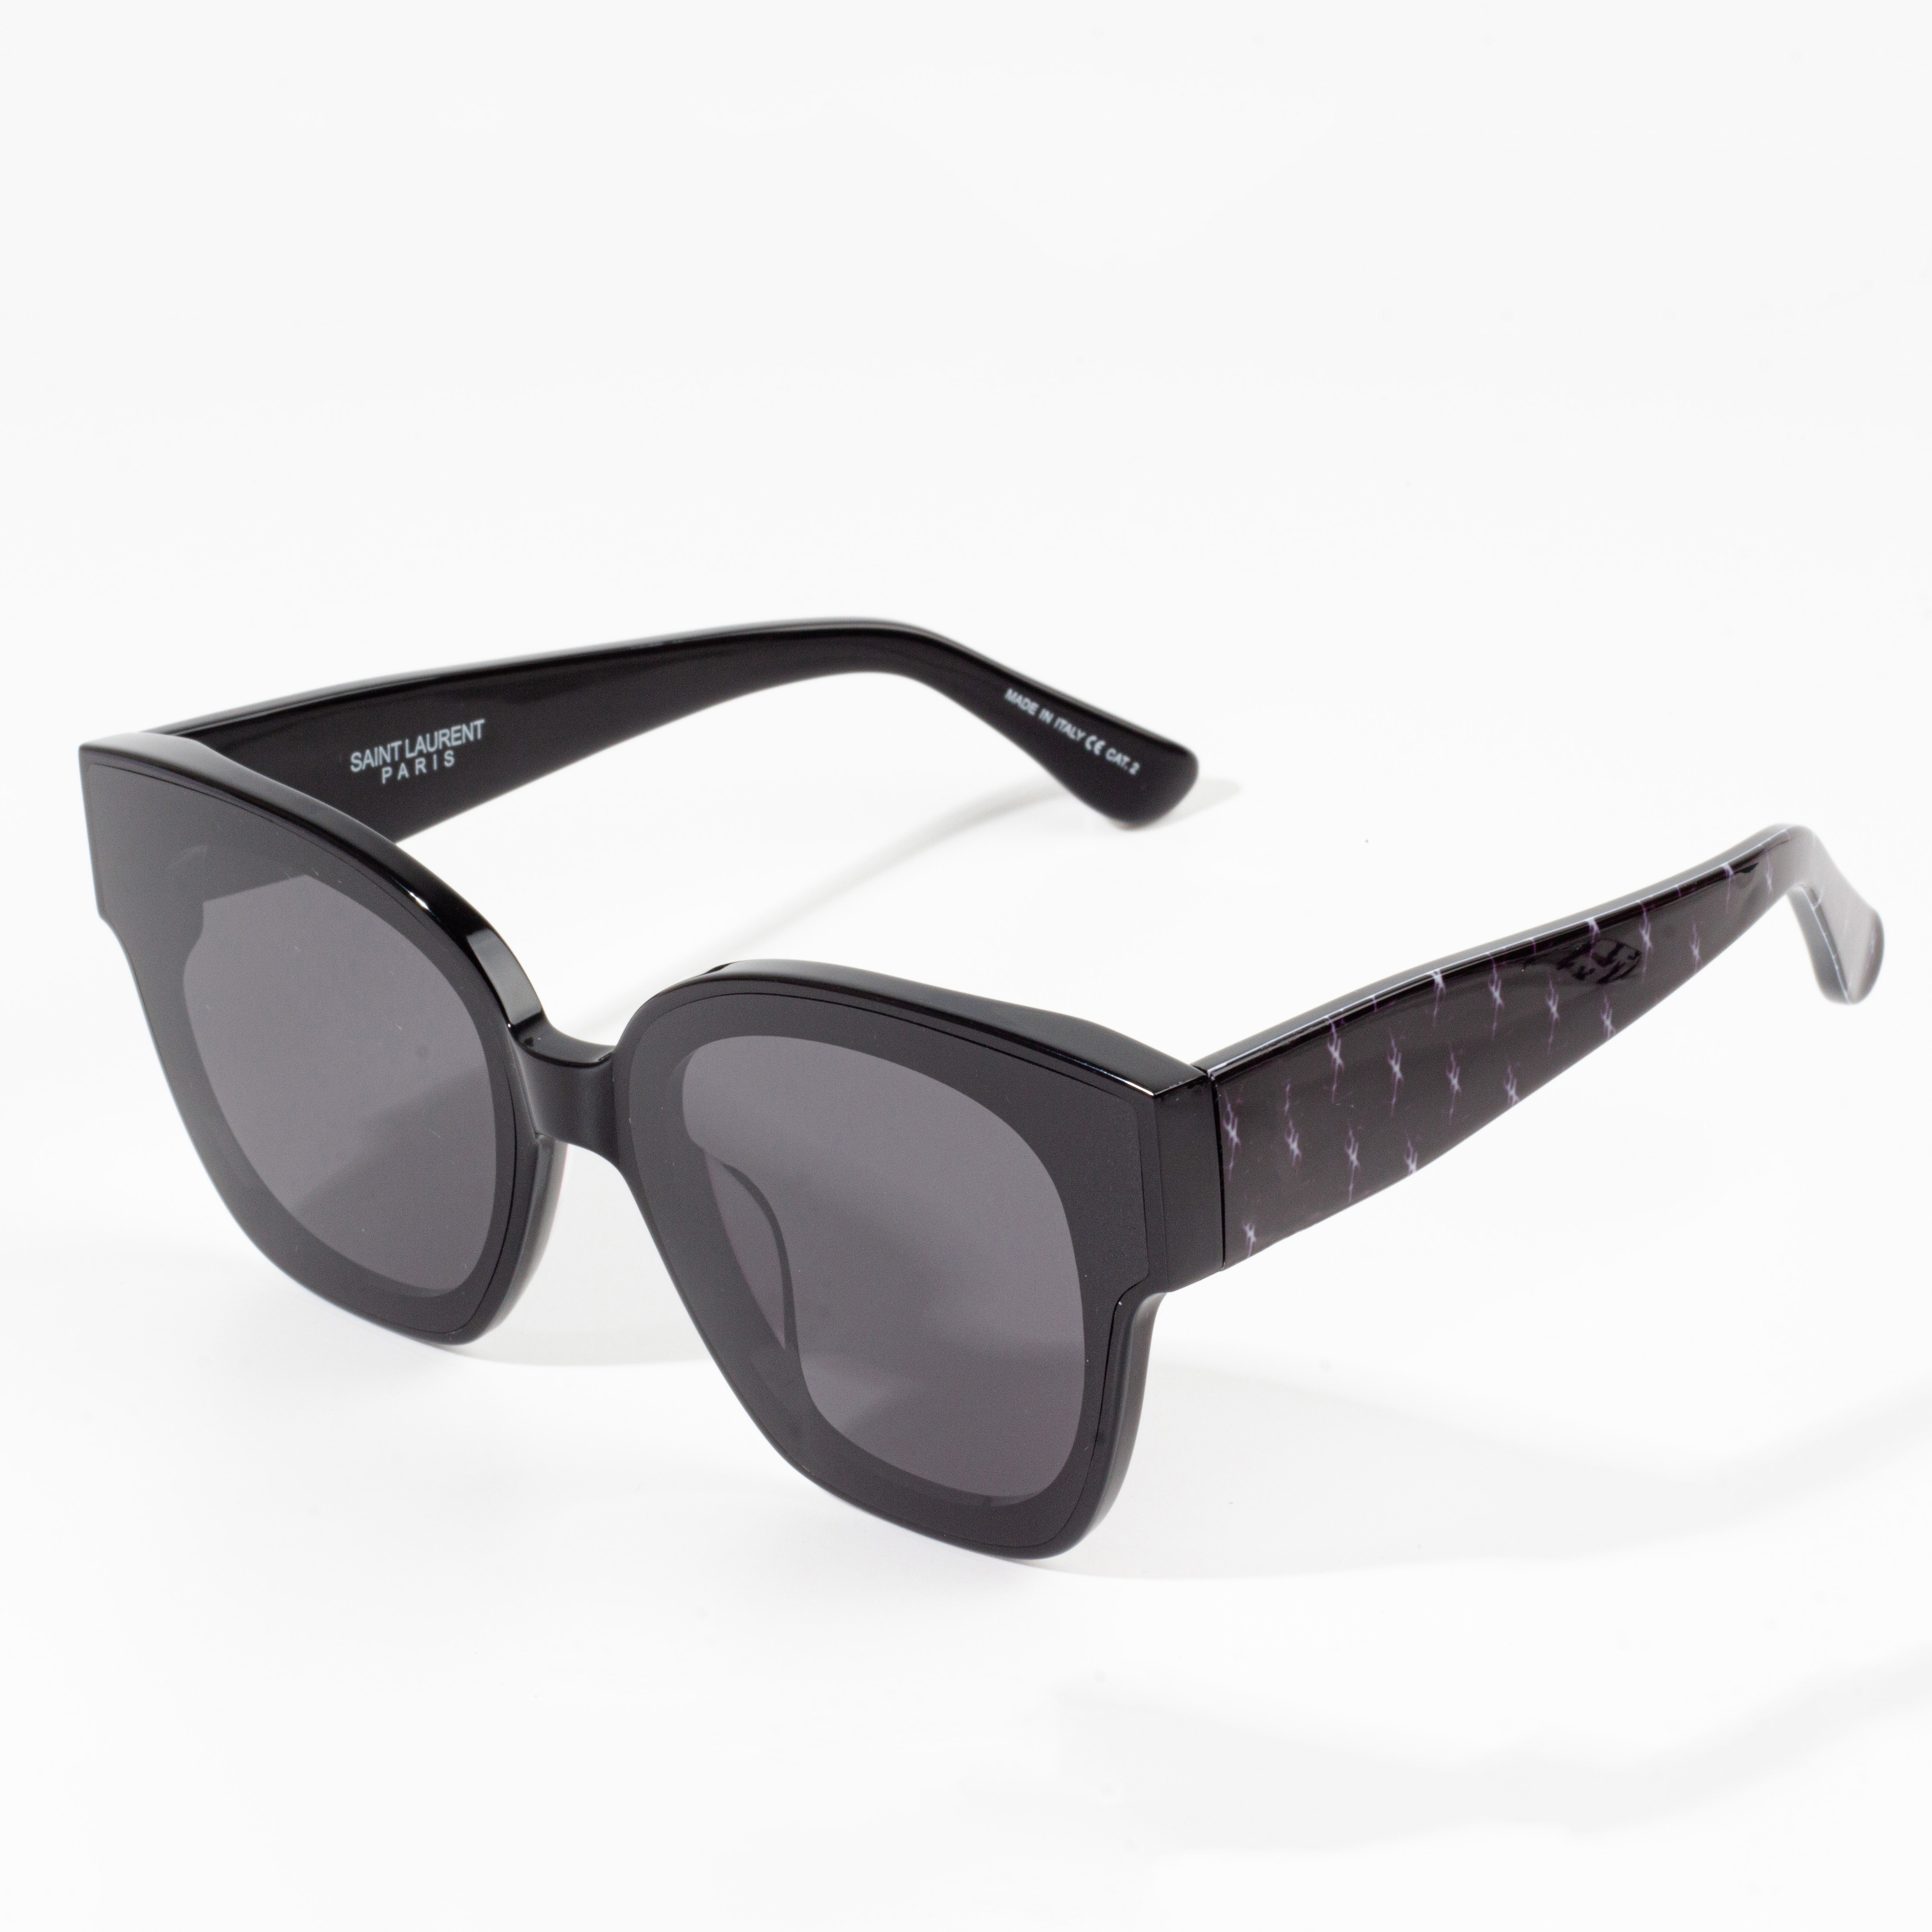 Fashionable luxury rimless sunglasses